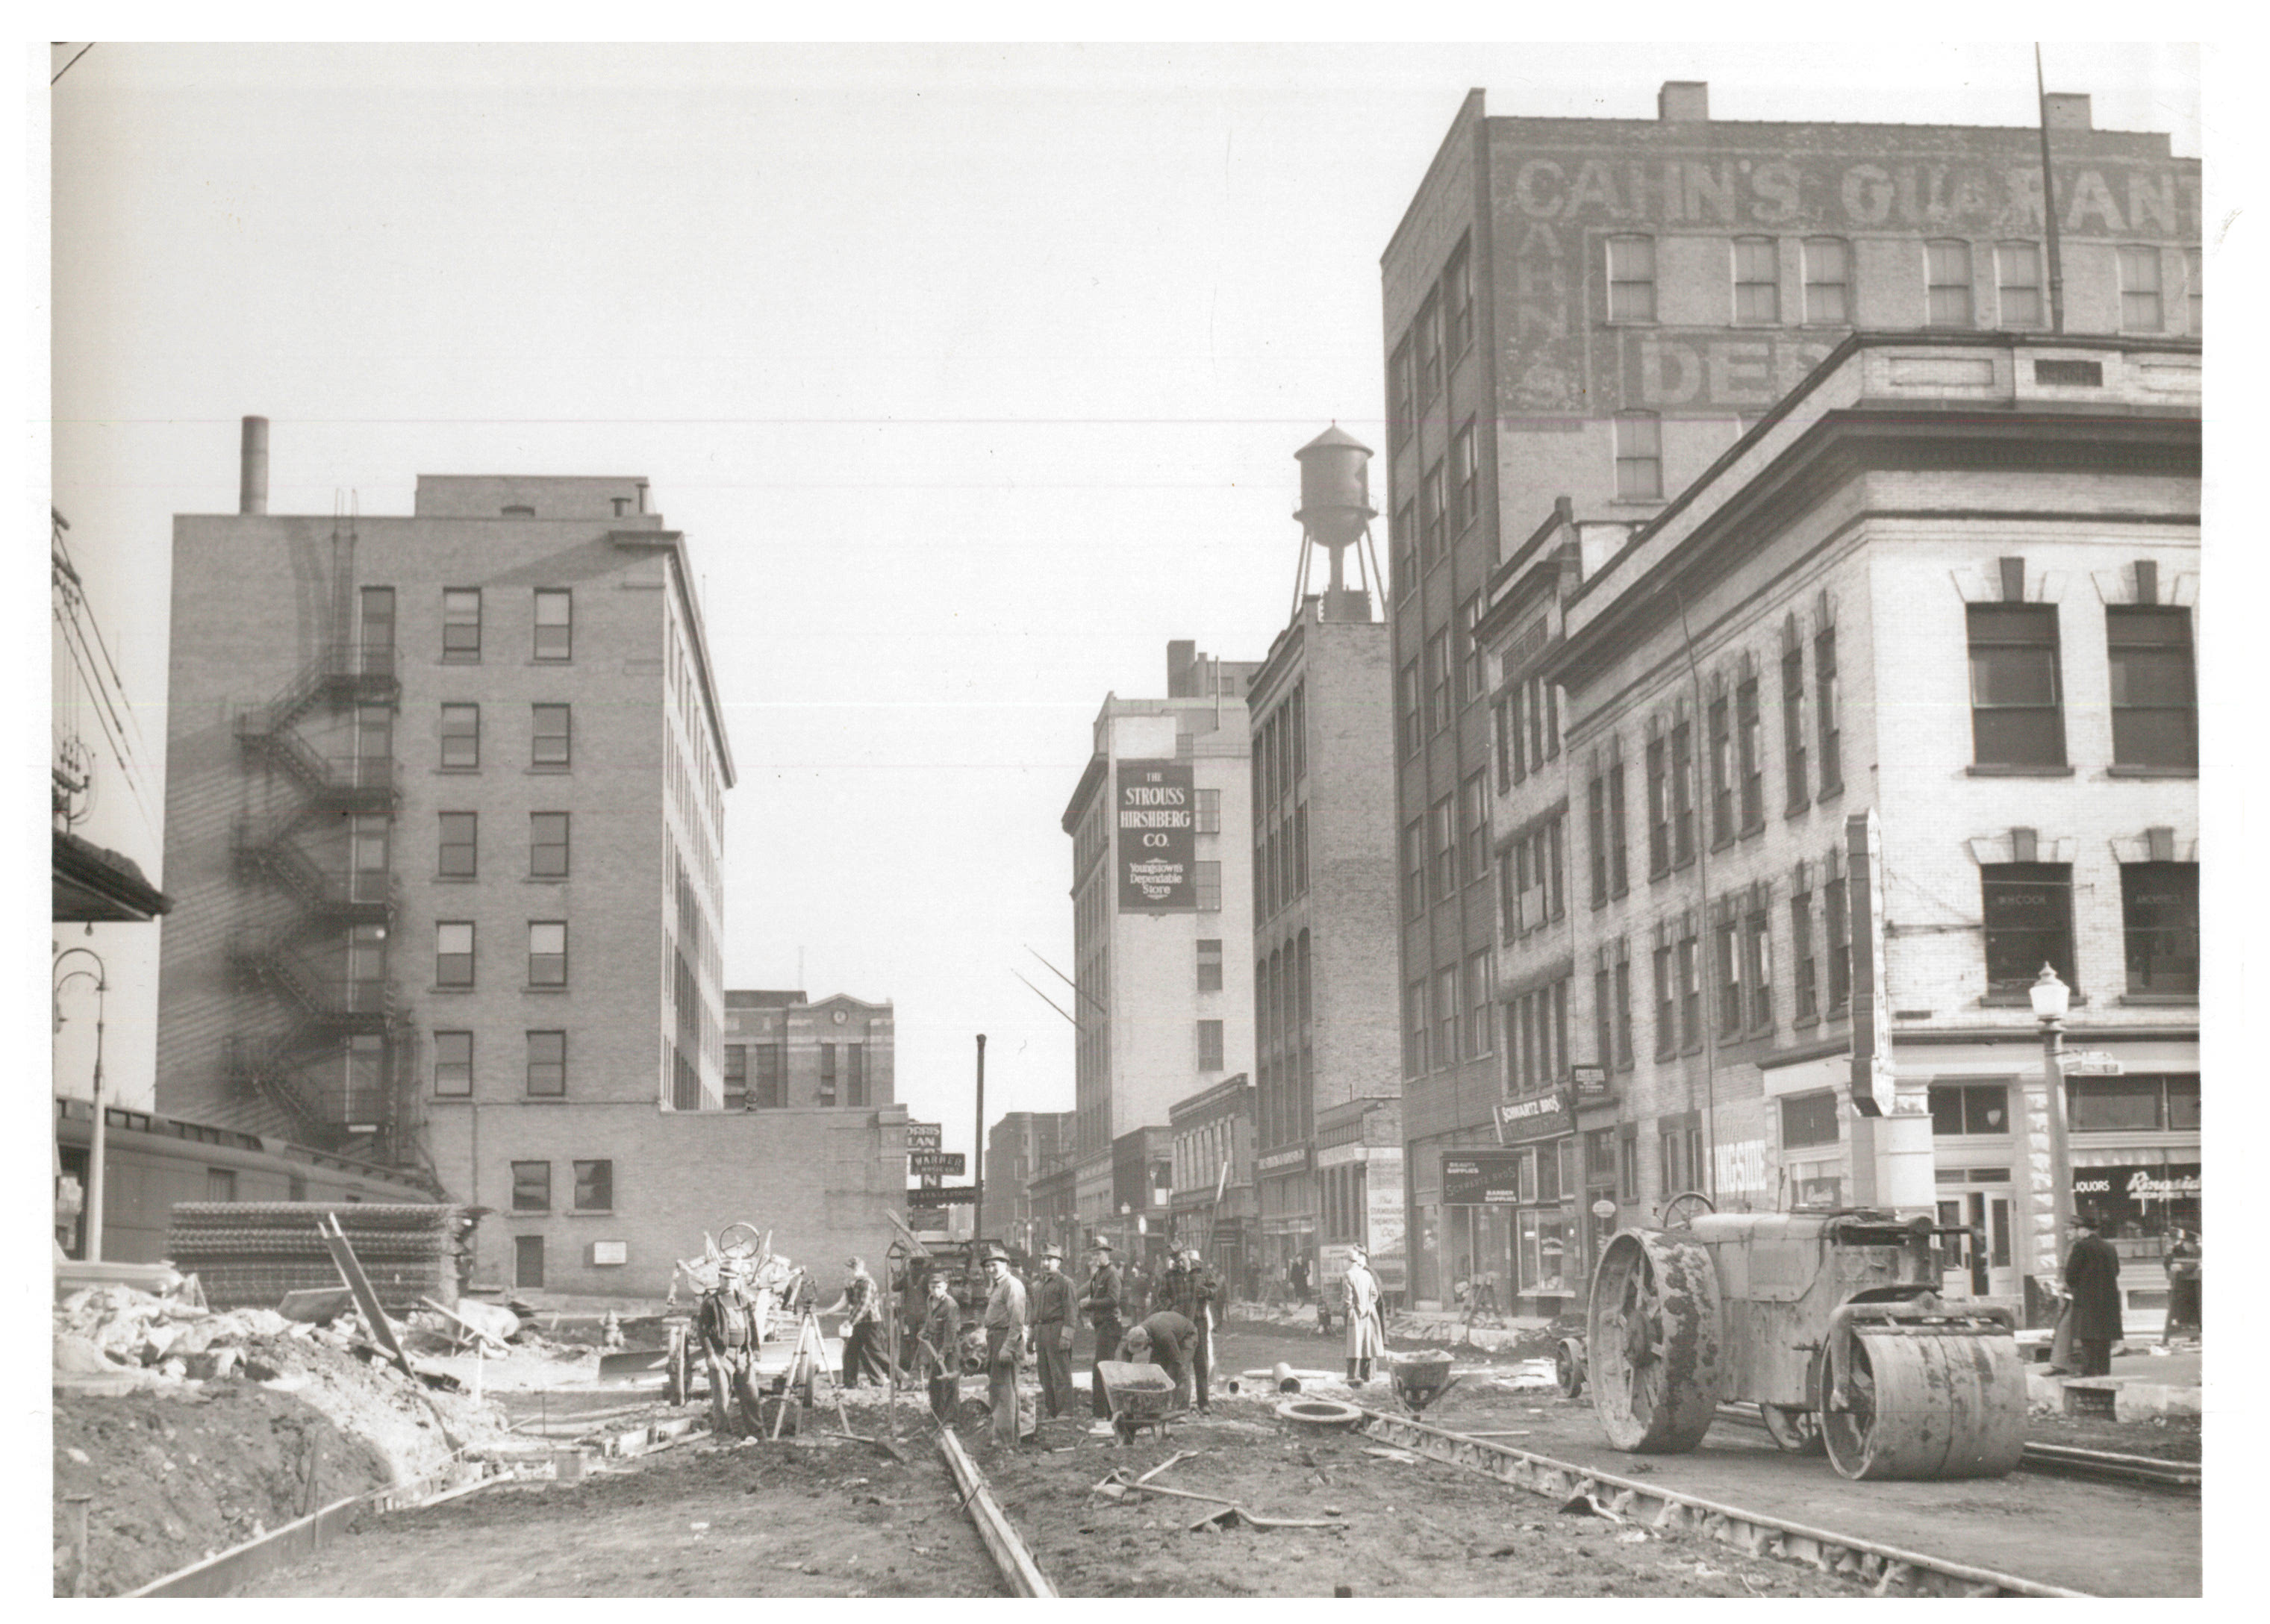 Commerce Street widening 1939